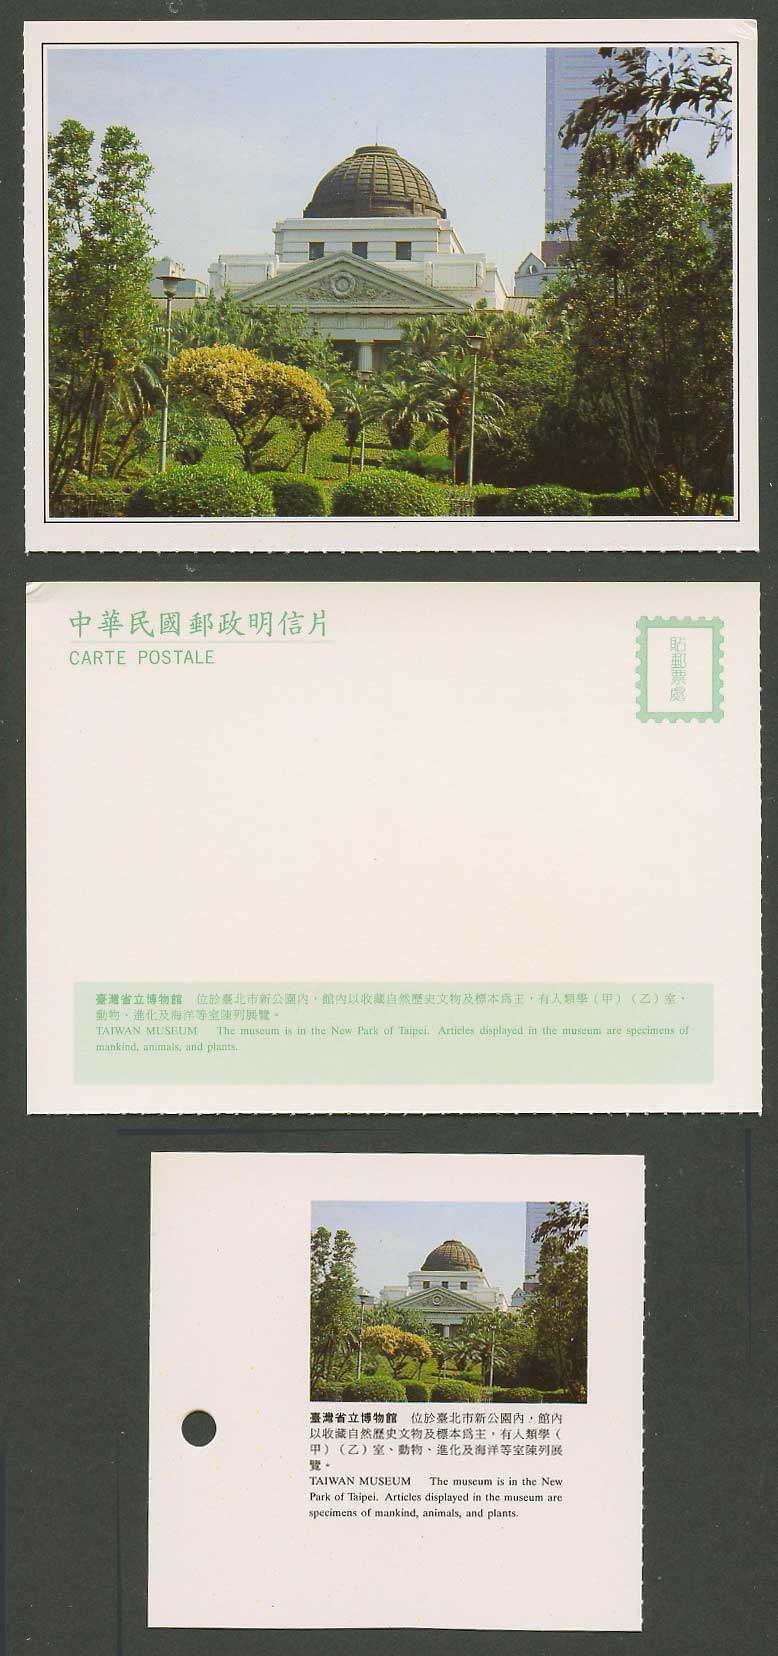 Taiwan Formosa China Postcard Taiwan Museum in New Park of Taipei 臺灣省立博物館 臺北市新公園